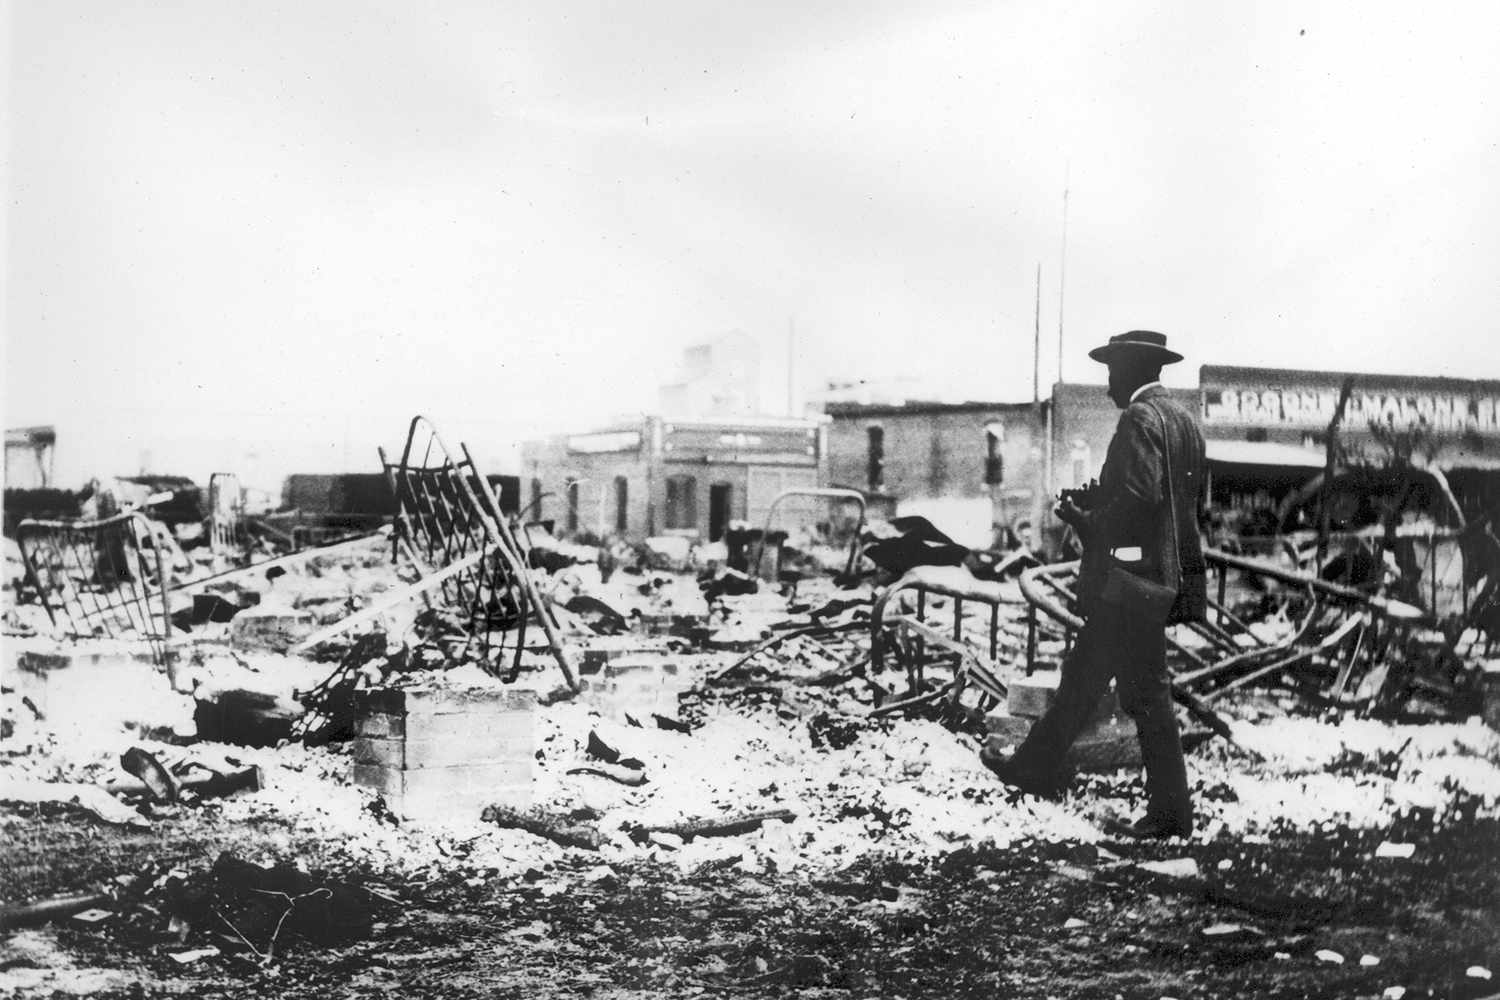 The 1921 Tulsa Massacre